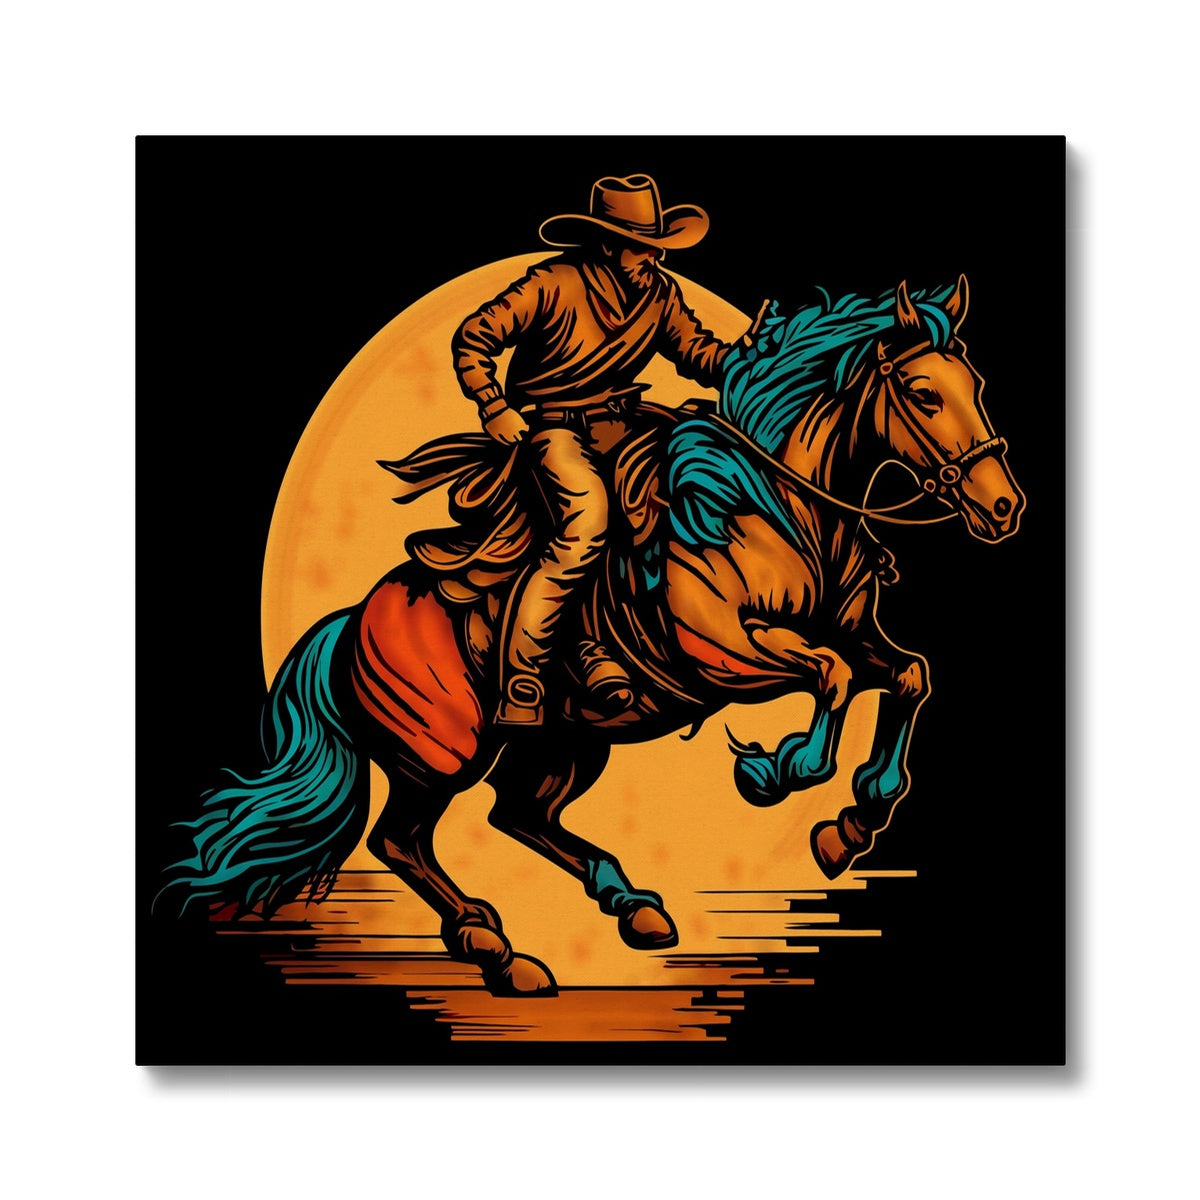 Adventurous Cowboy With A Horse Art Canvas